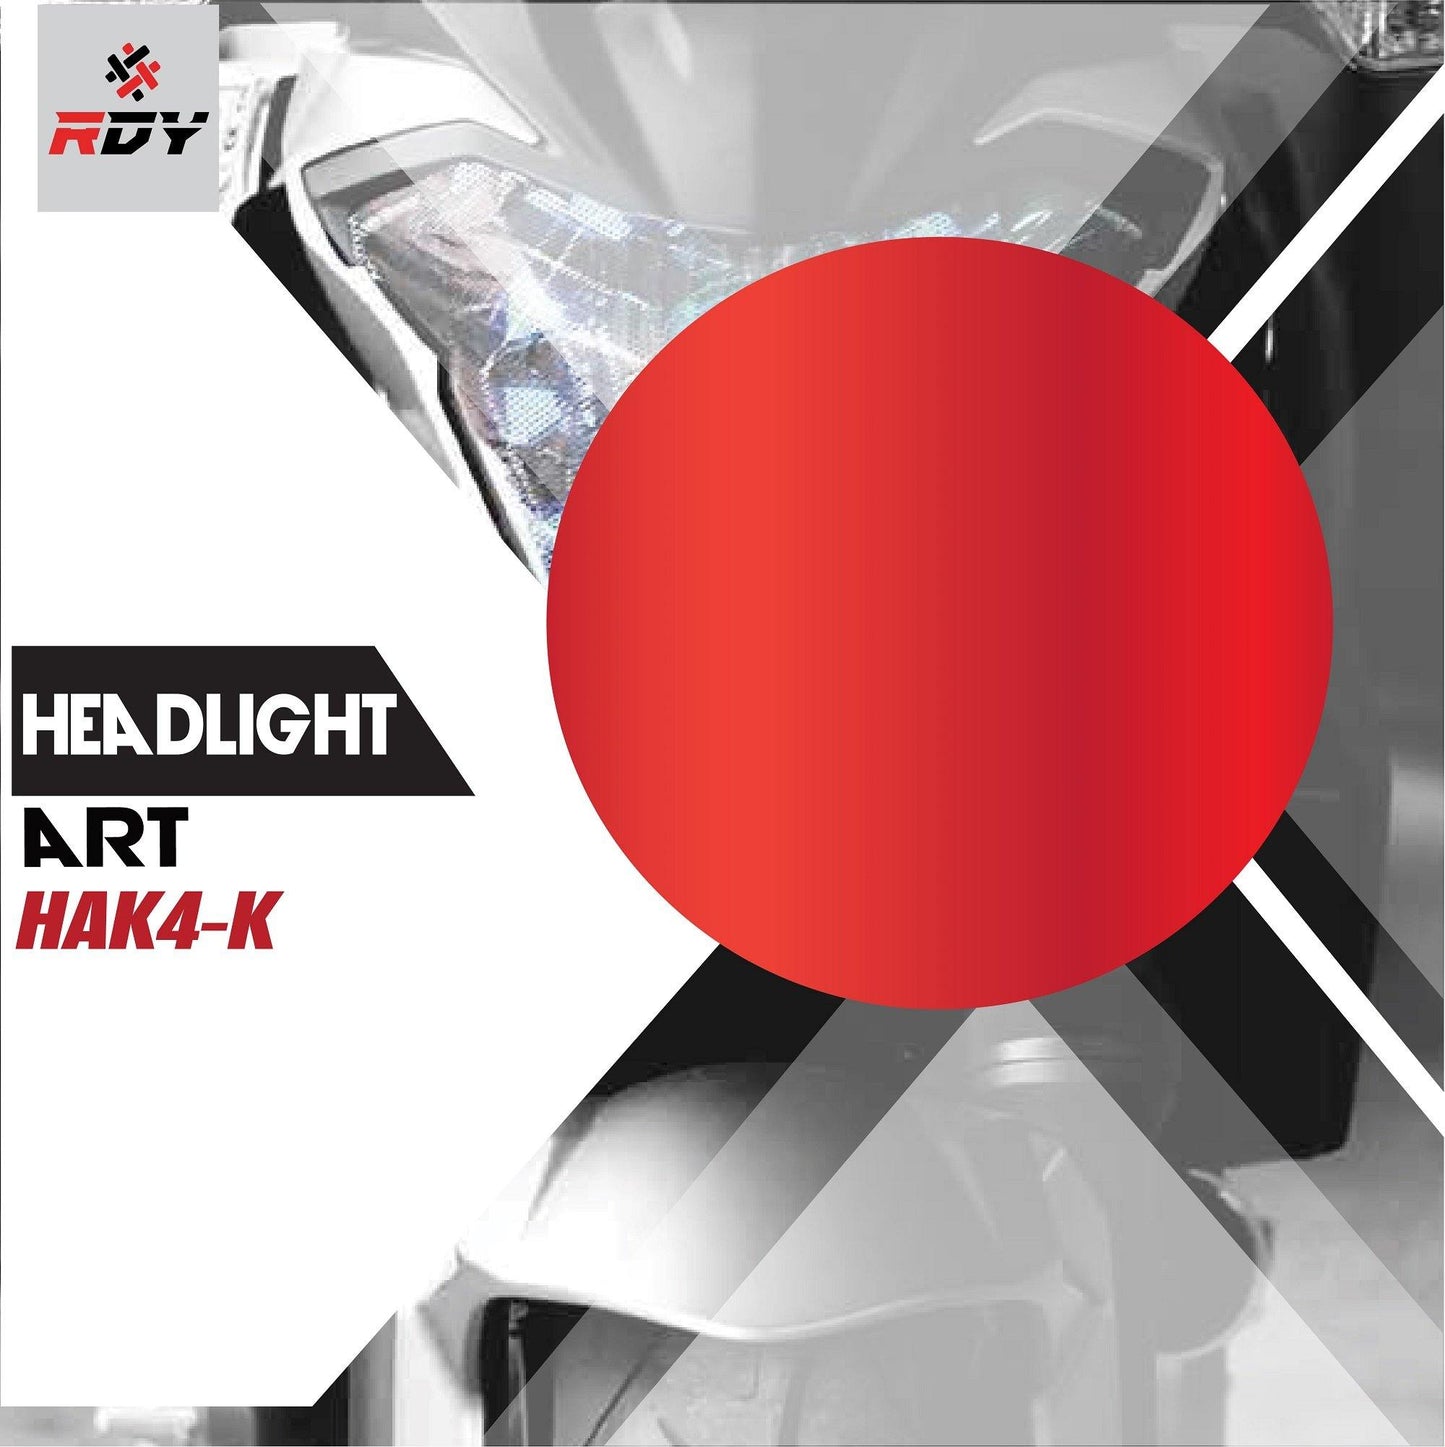 RDY Headlight Art fits for Kawasaki VN900 - Durian Bikers